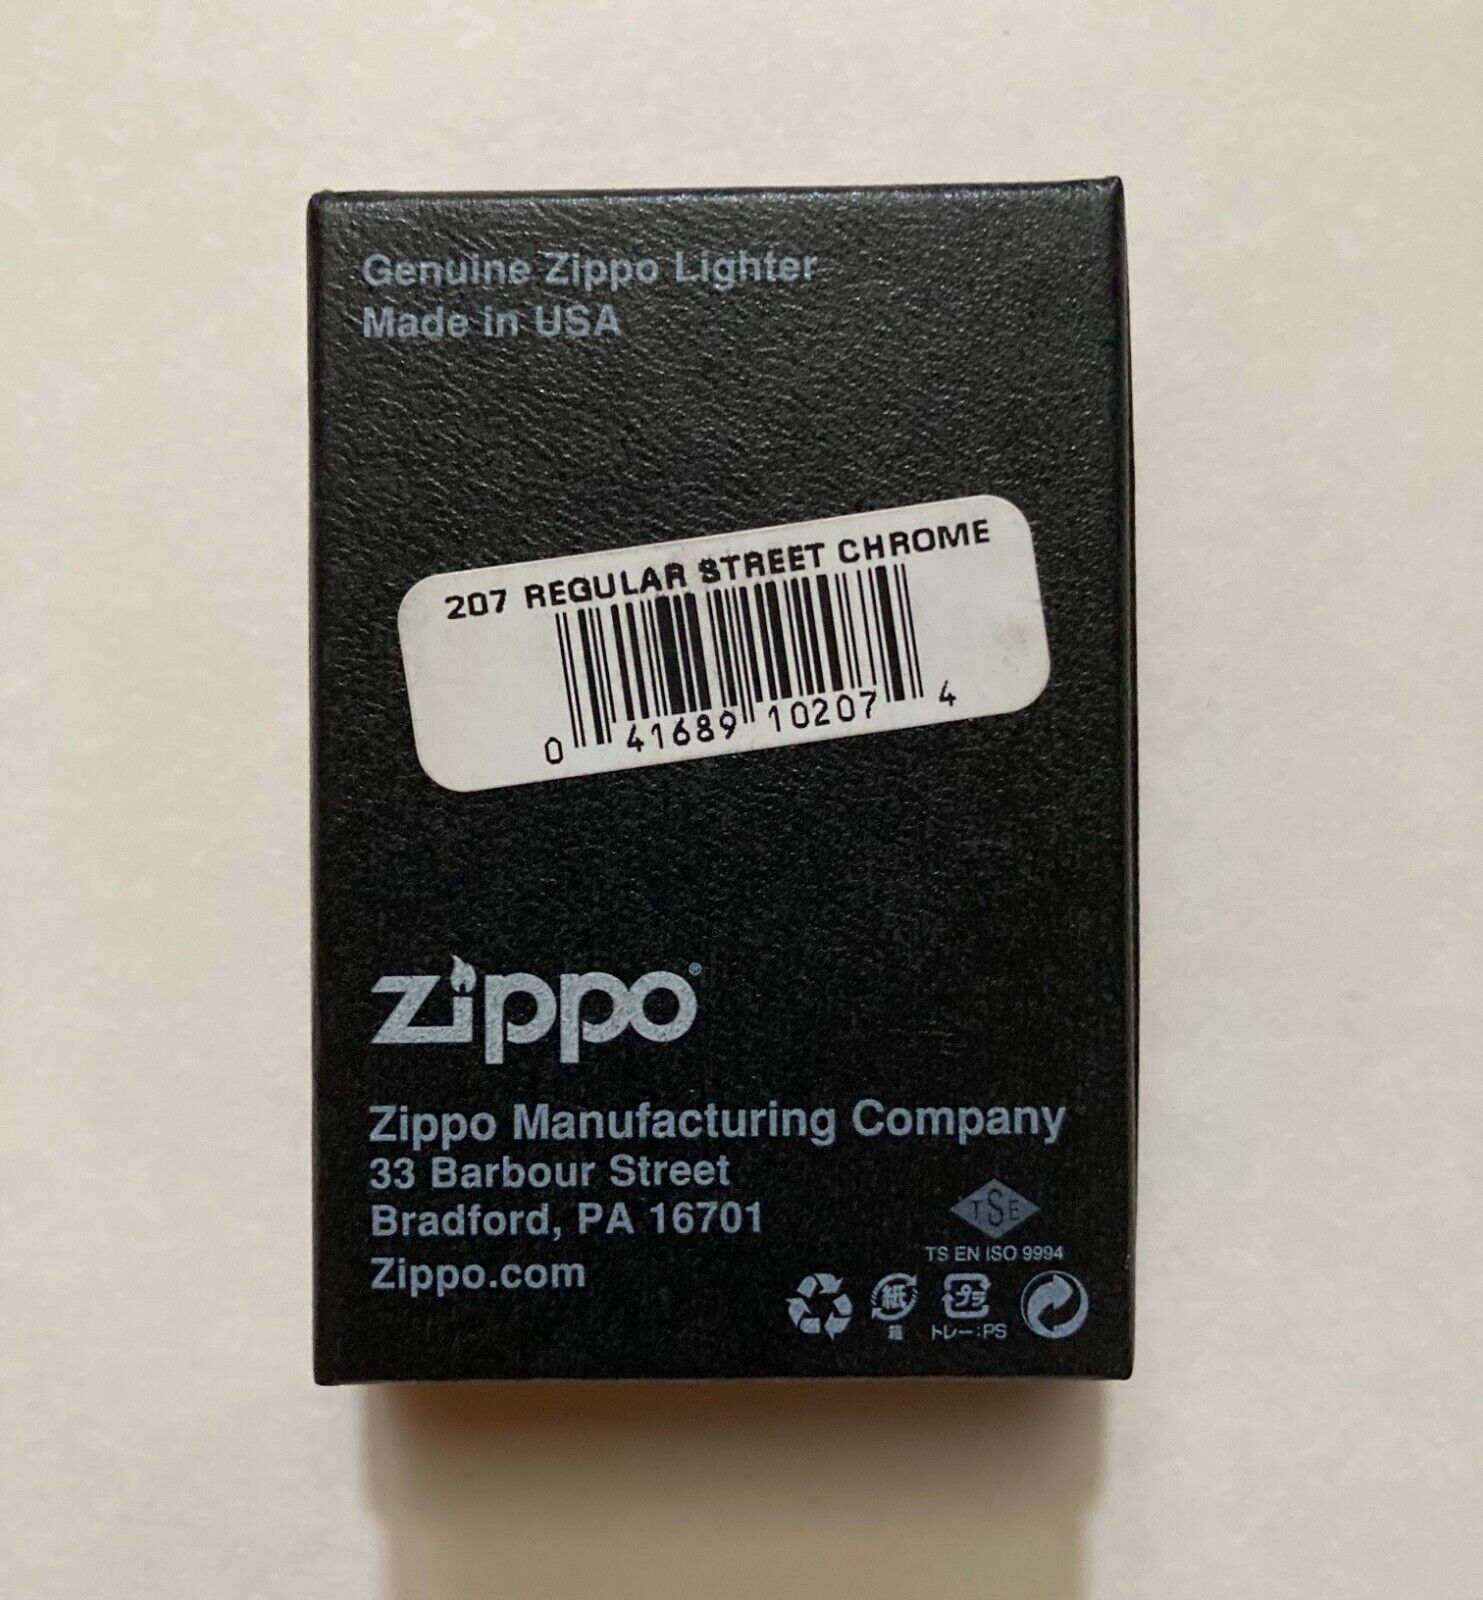 Bật Lửa Zippo 207 REGULAR STREET CHROME